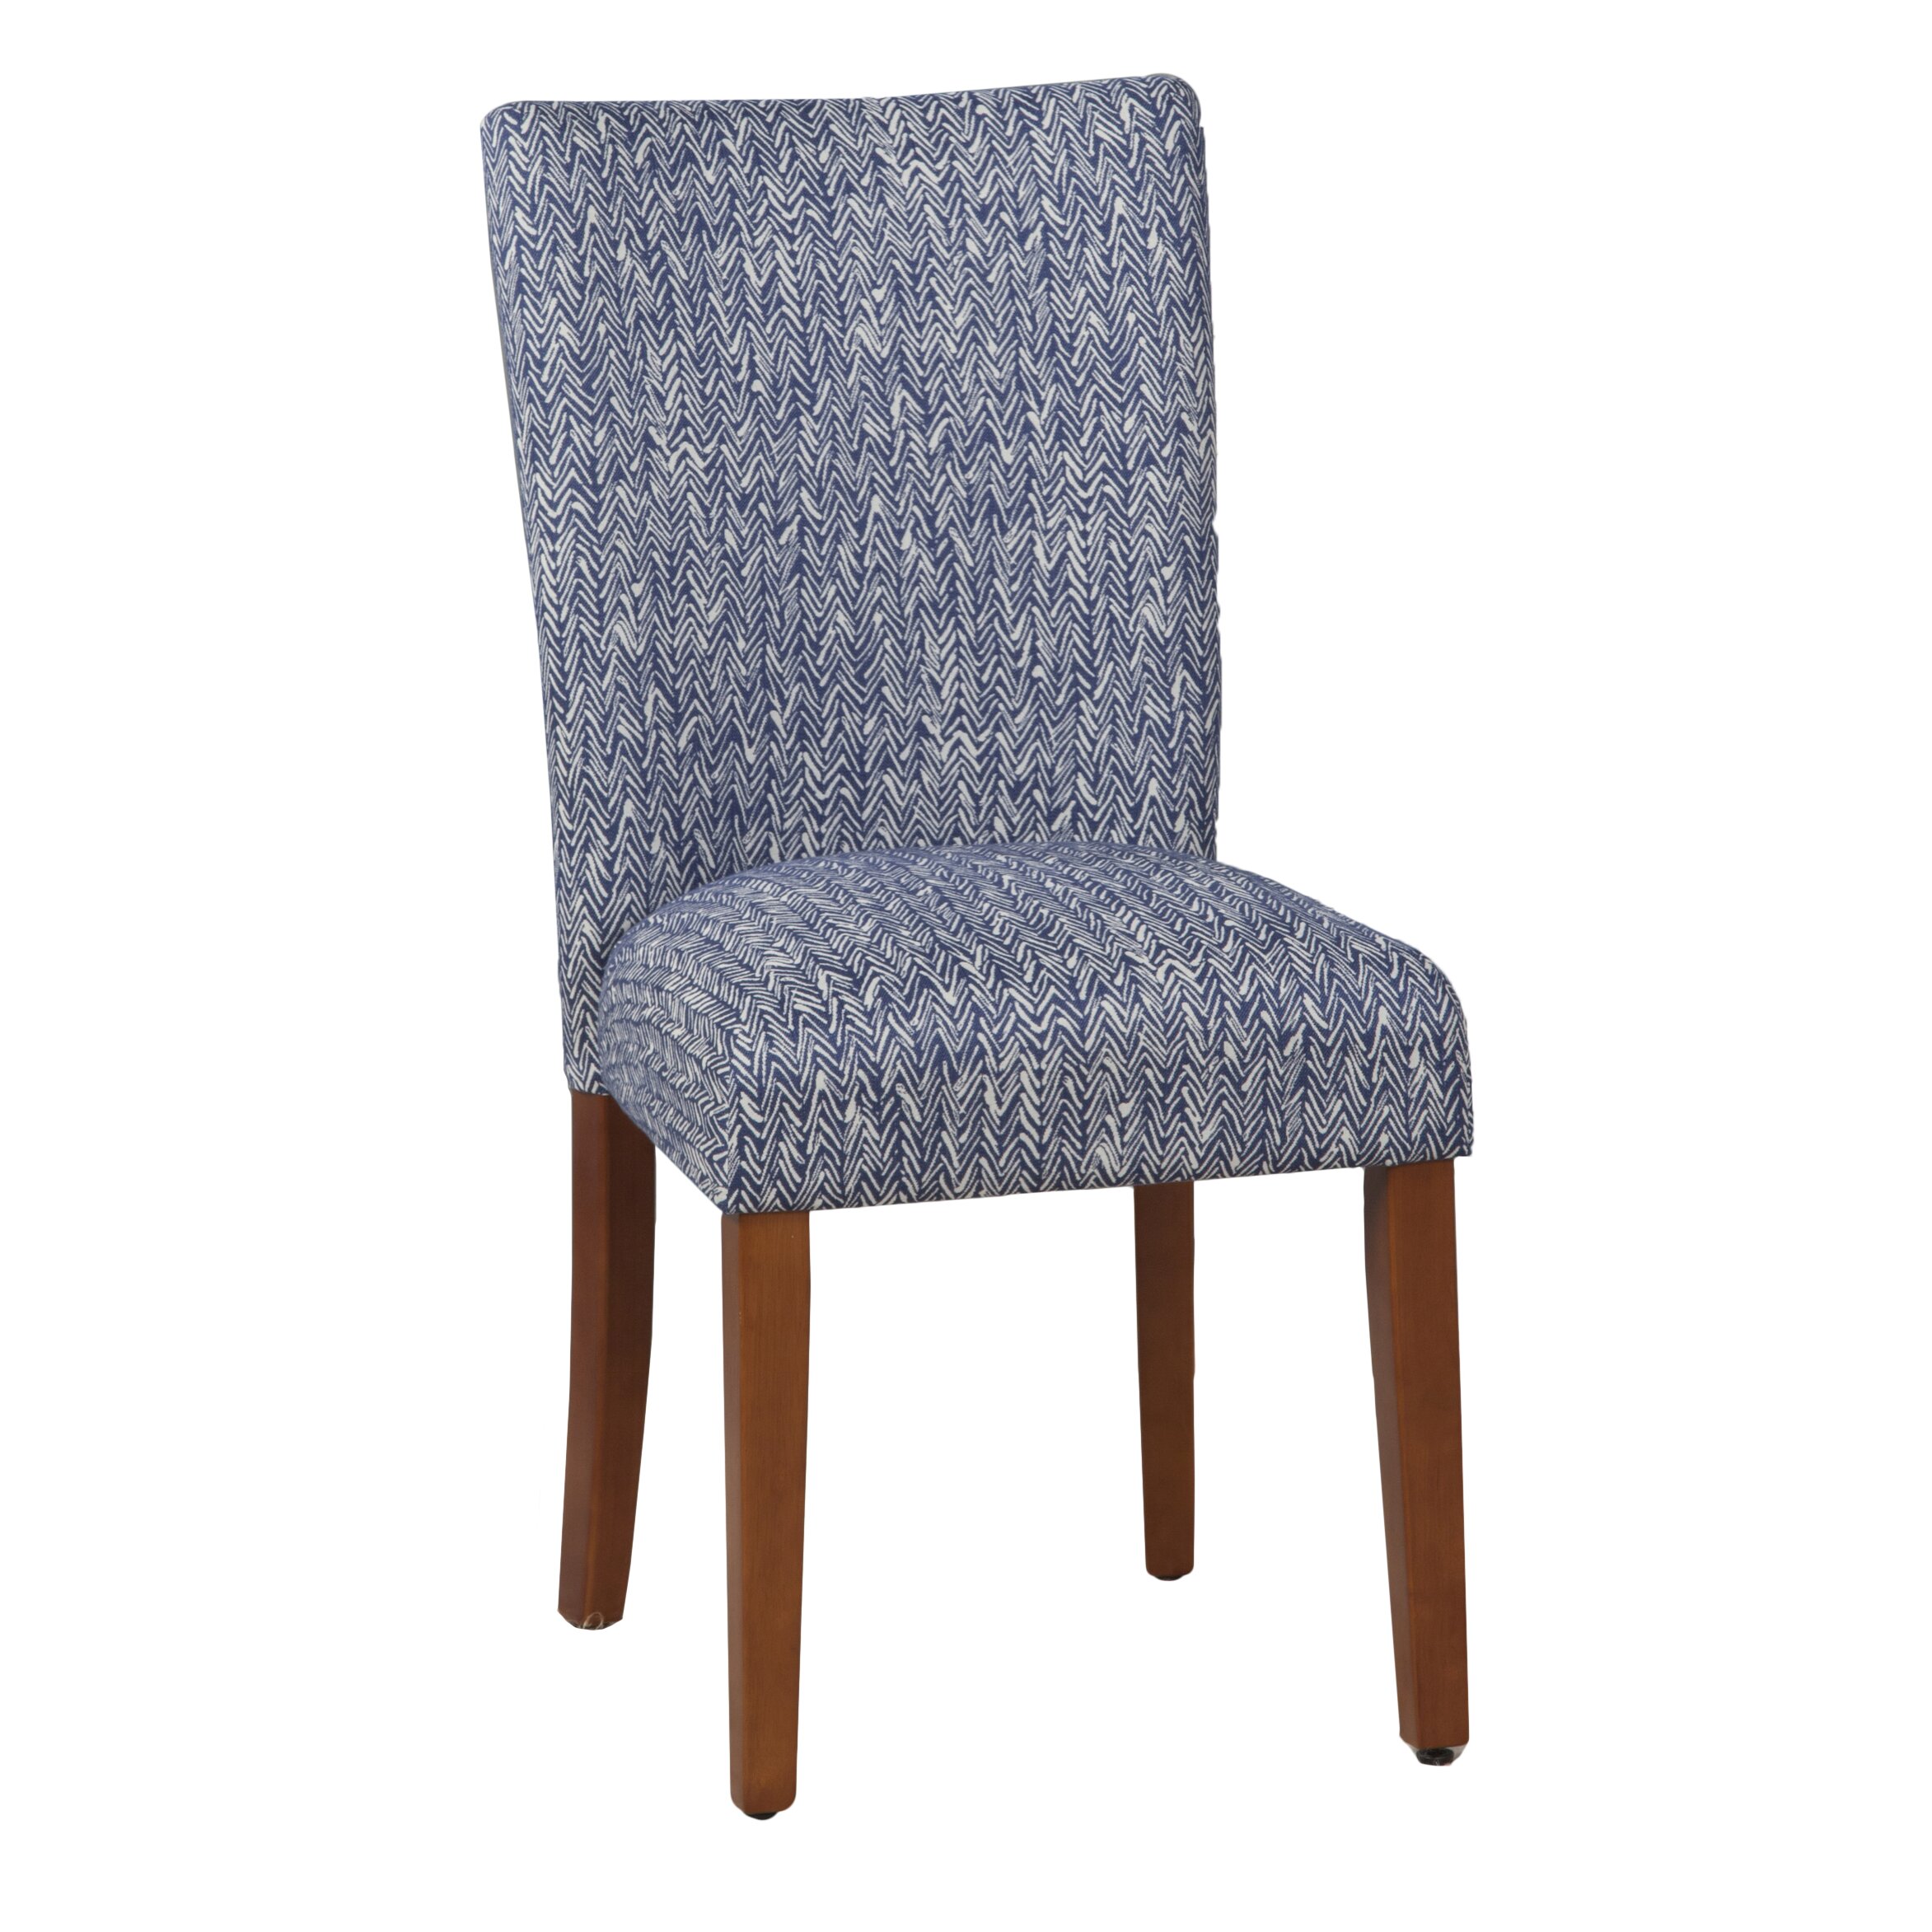 HomePop Upholstered Parsons Chair in Blue & Reviews | Wayfair